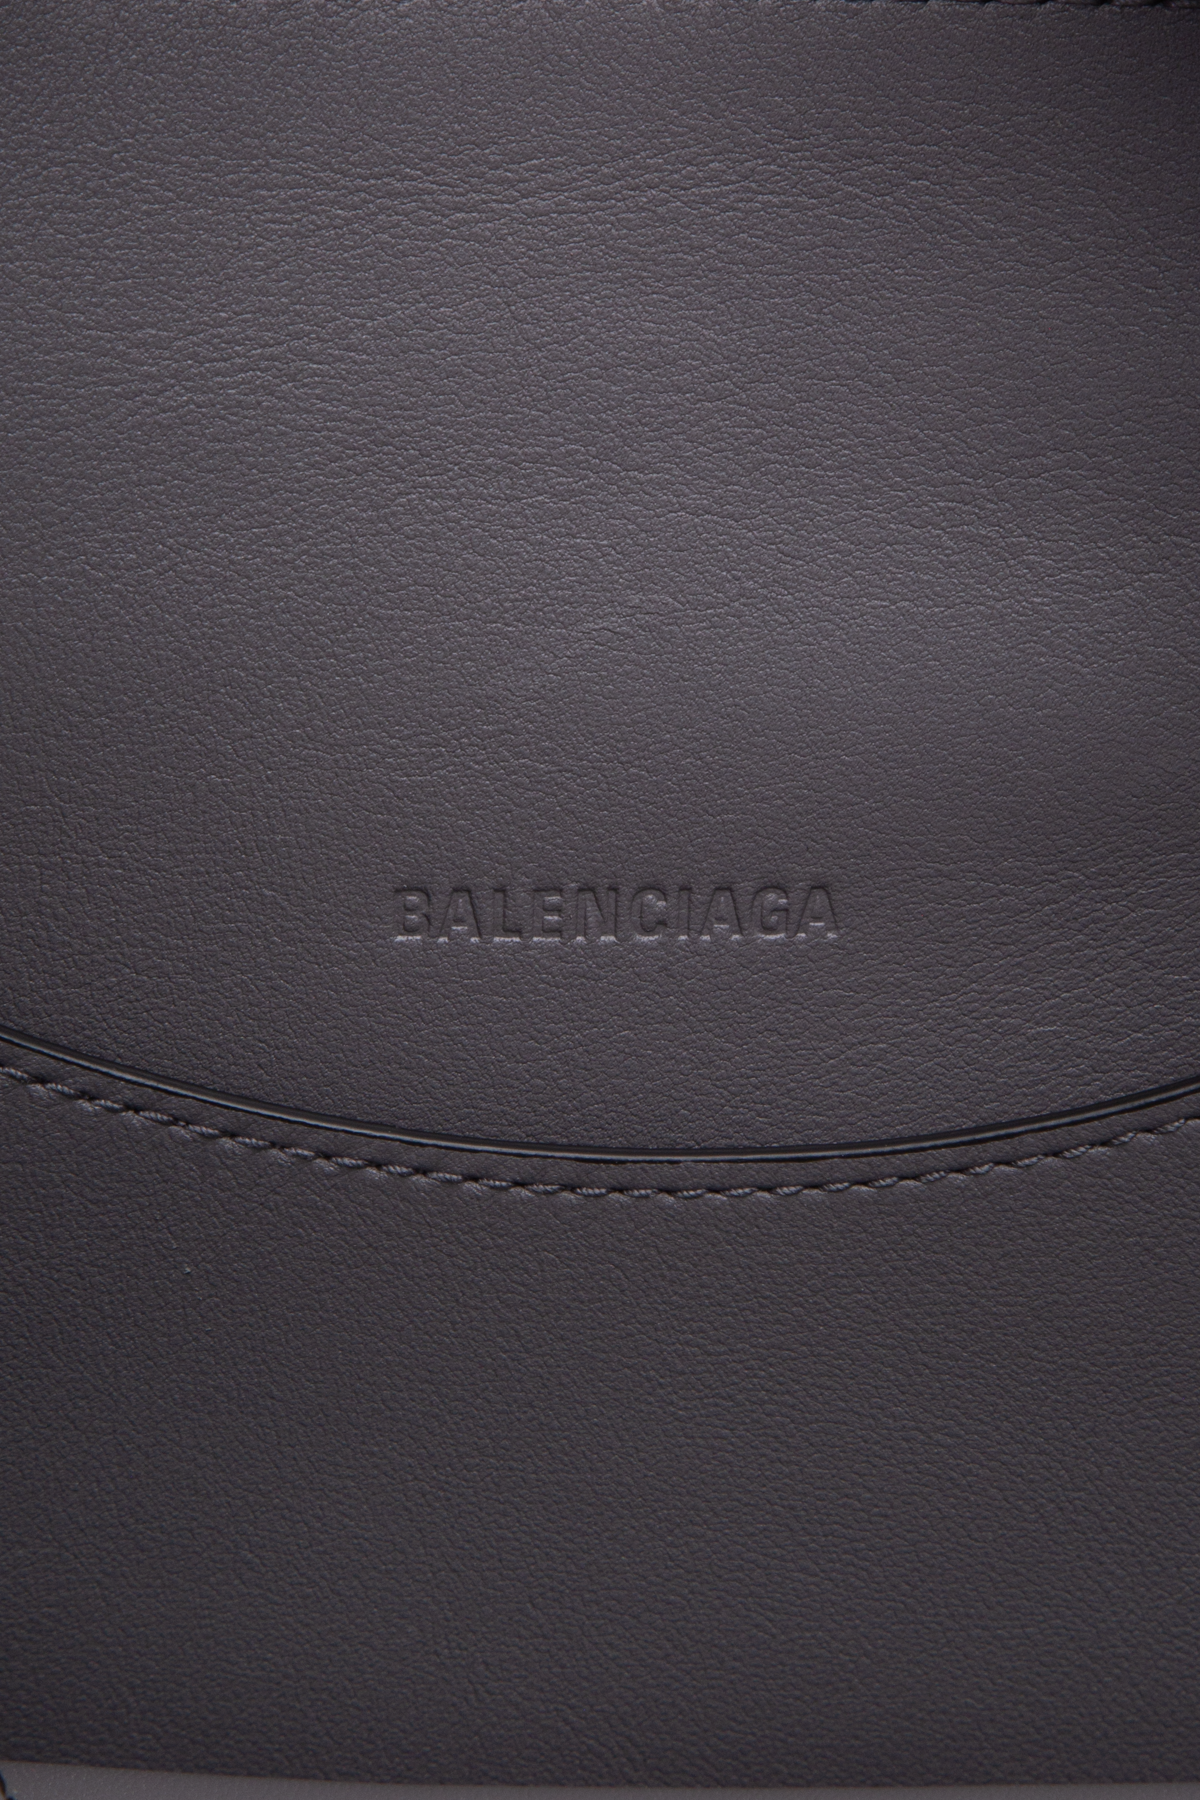 Balenciaga Neo Classic Clutch Bag